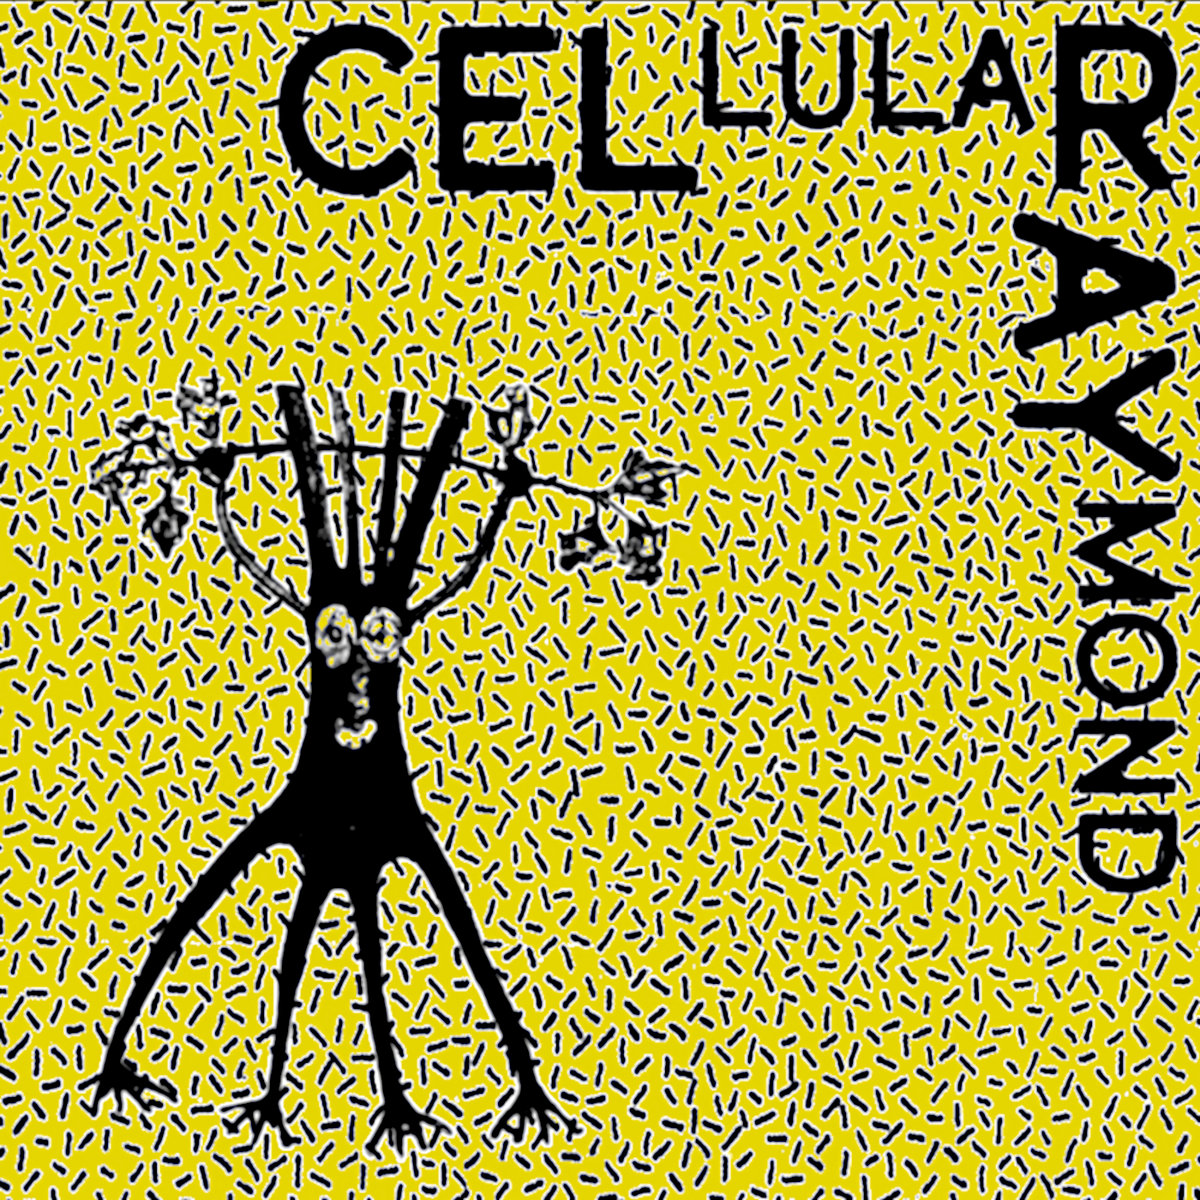 Cellular Raymond album cover